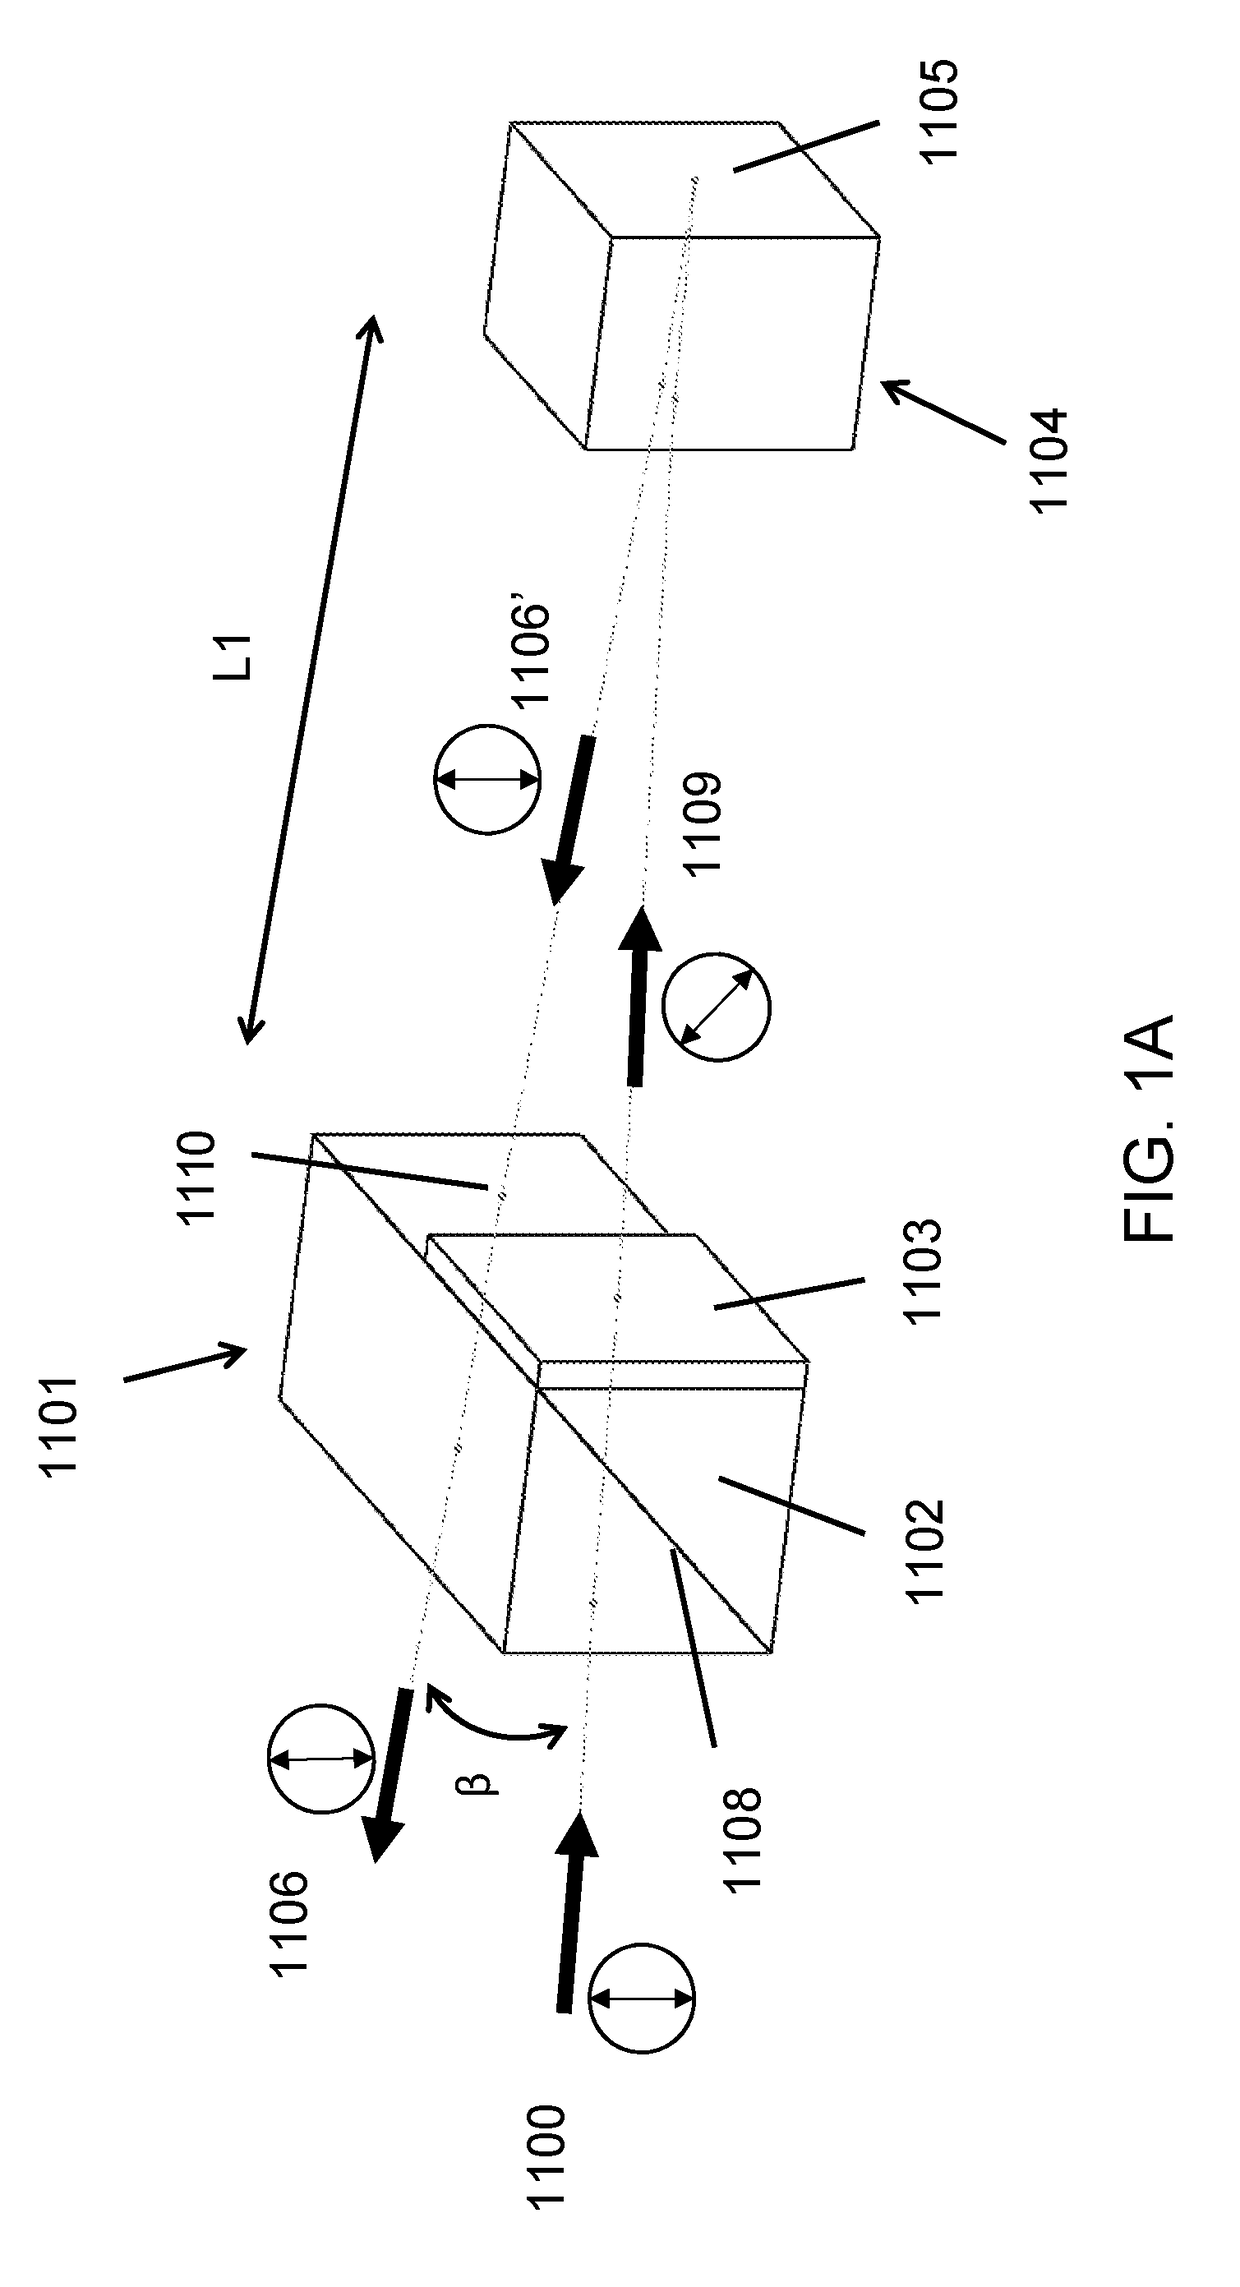 Single and multi-stage high power optical isolators using a single polarizing element